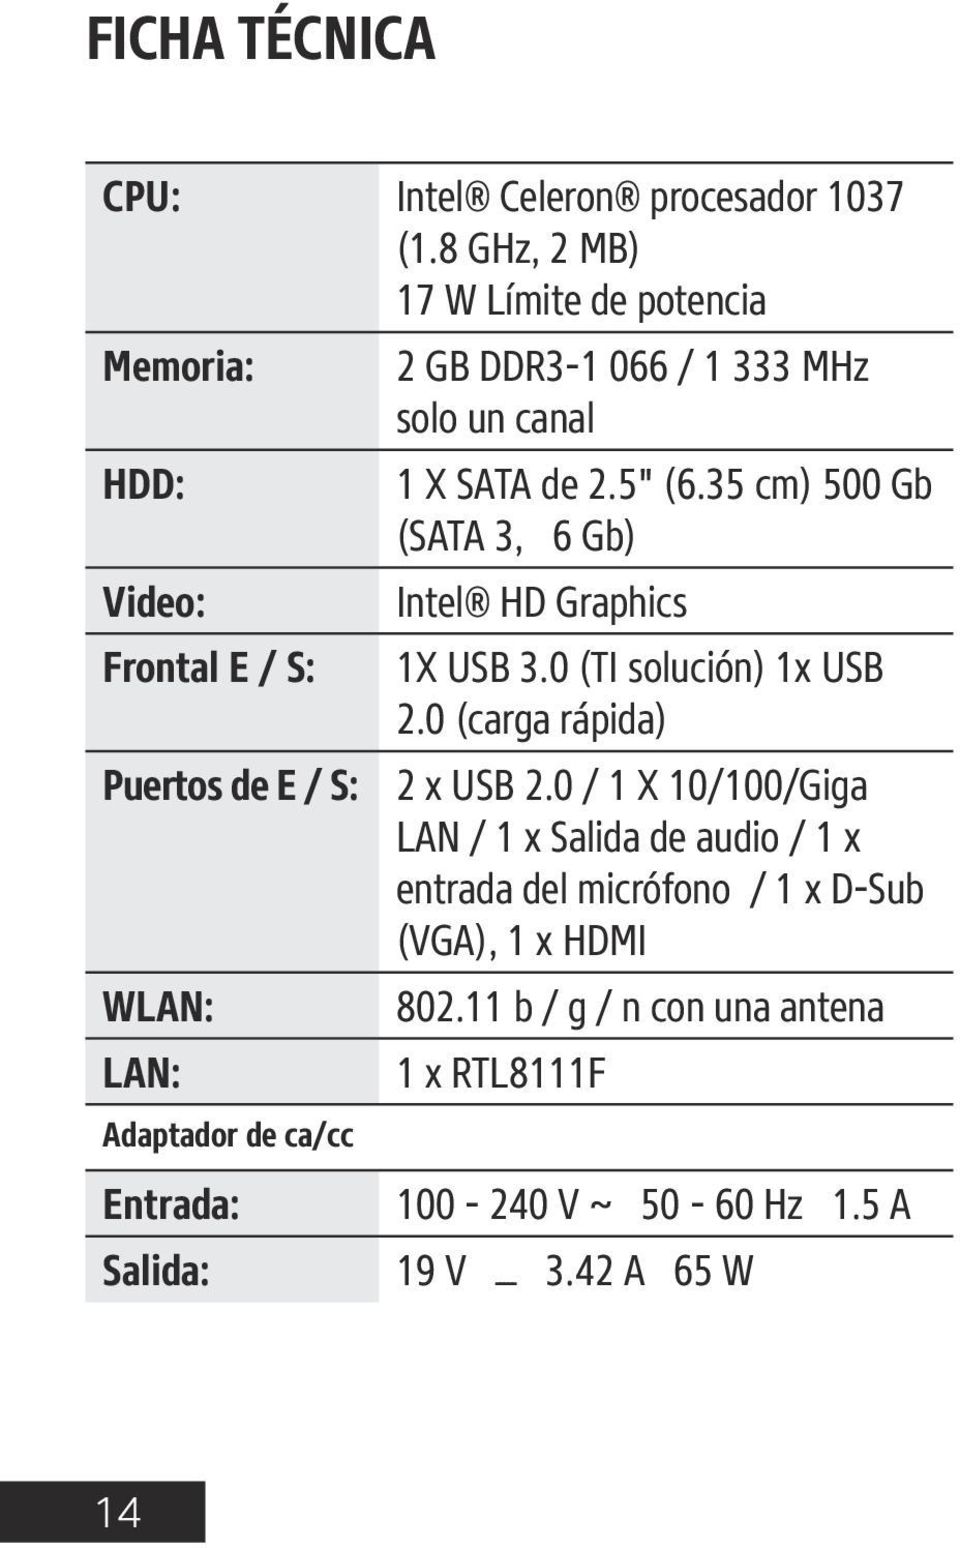 35 cm) 500 Gb (SATA 3, 6 Gb) Video: Intel HD Graphics Frontal E / S: 1X USB 3.0 (TI solución) 1x USB 2.